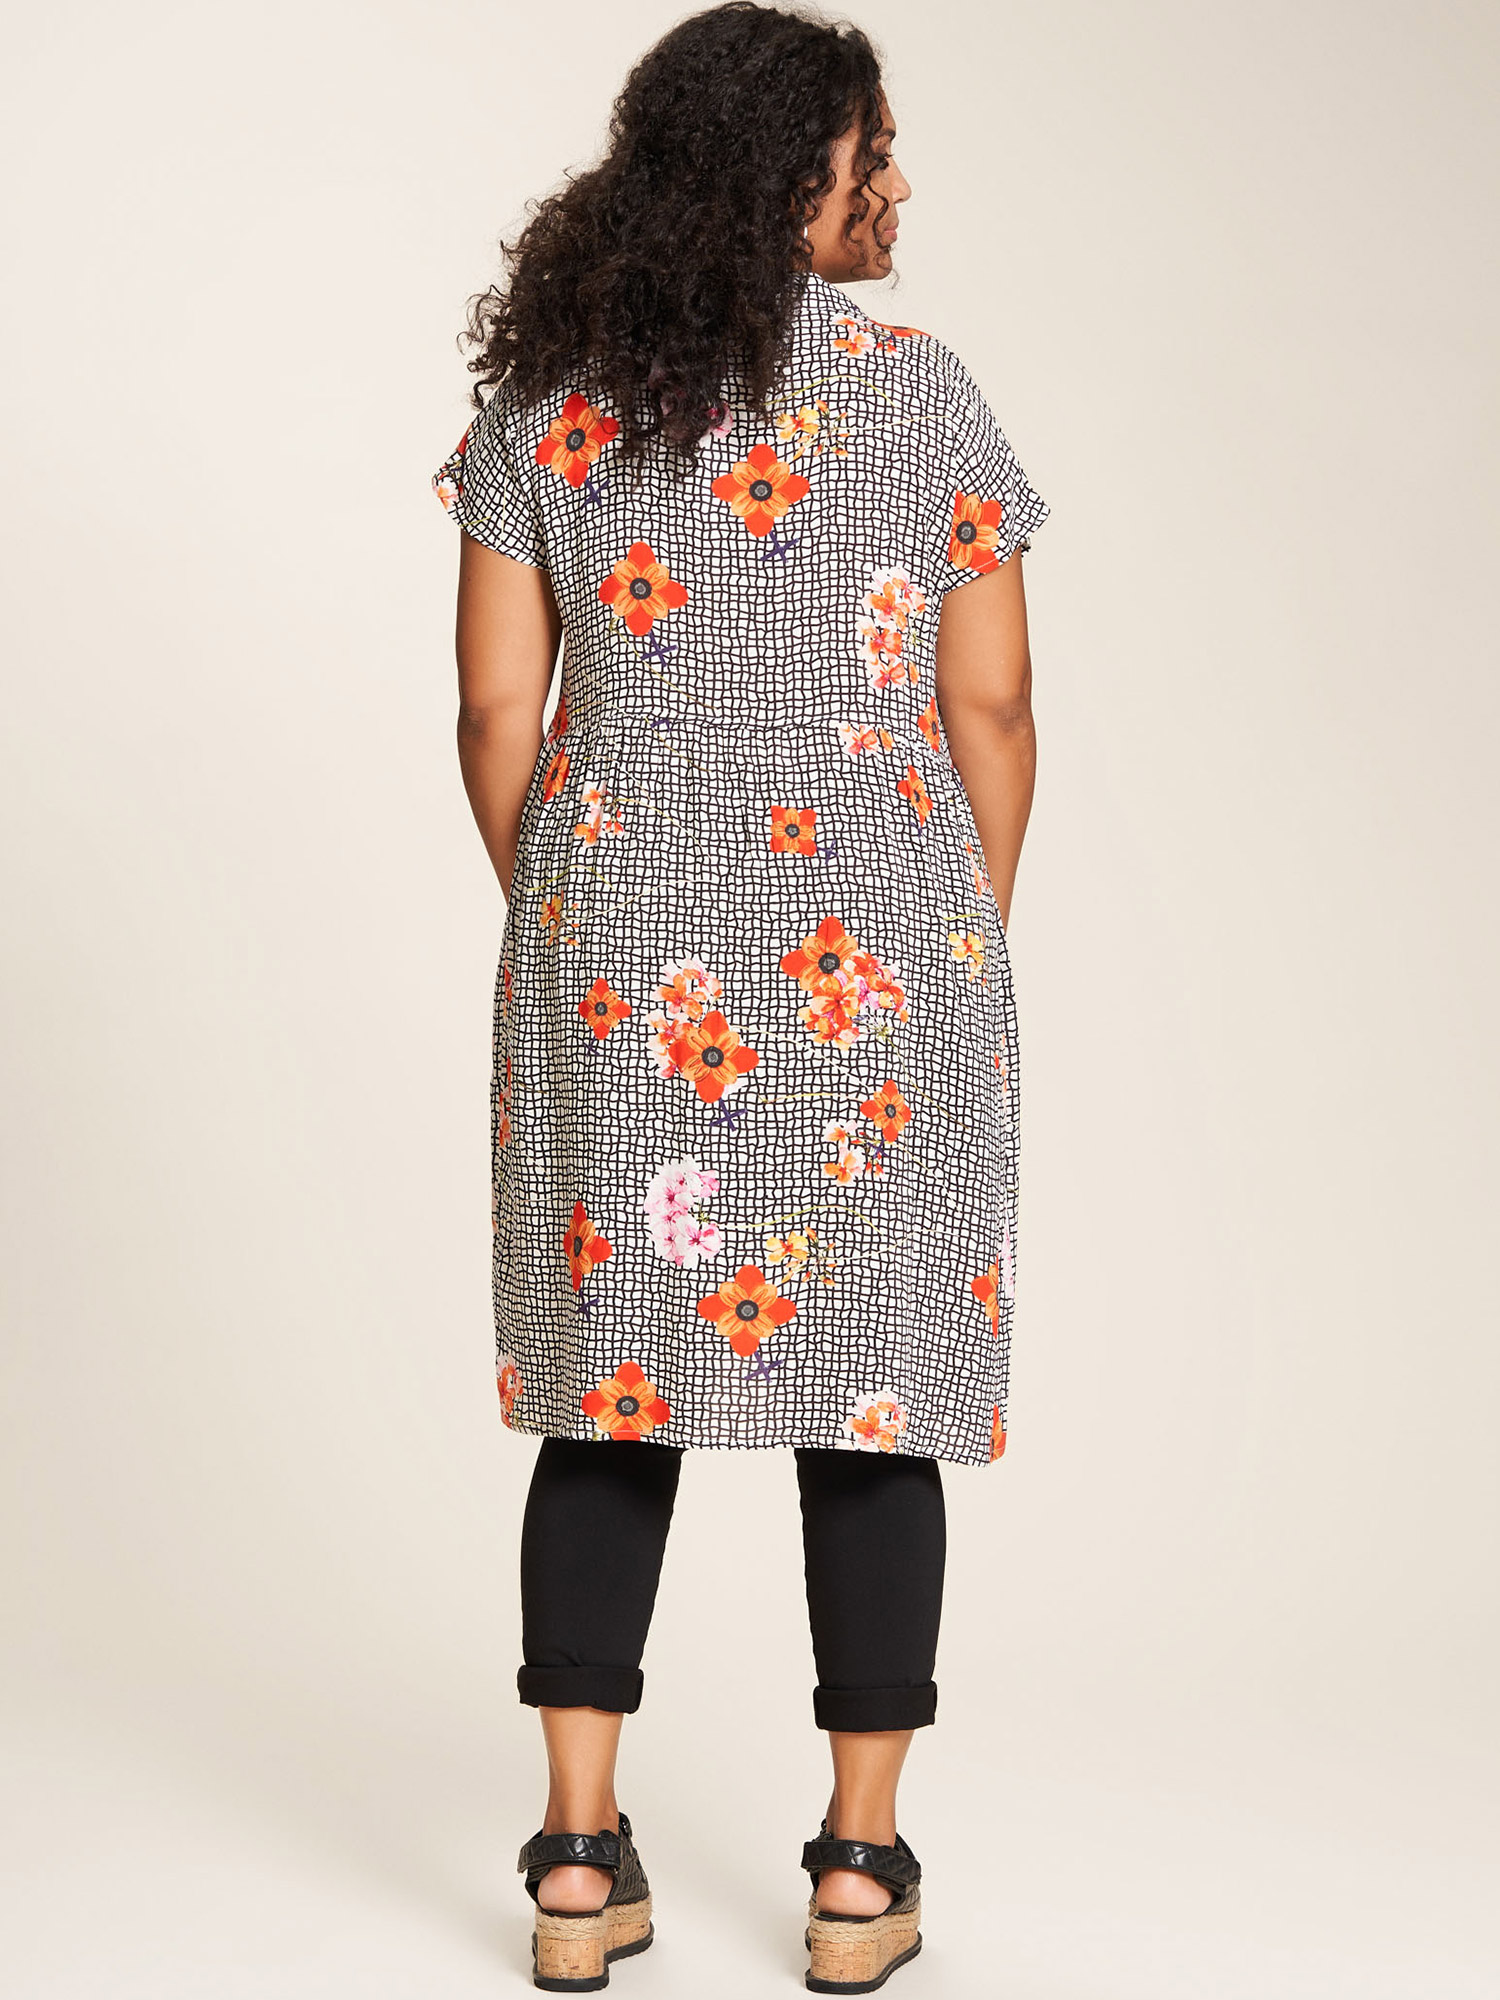 Lise - Lækker viskose kjole i flot print med orange blomster fra Studio